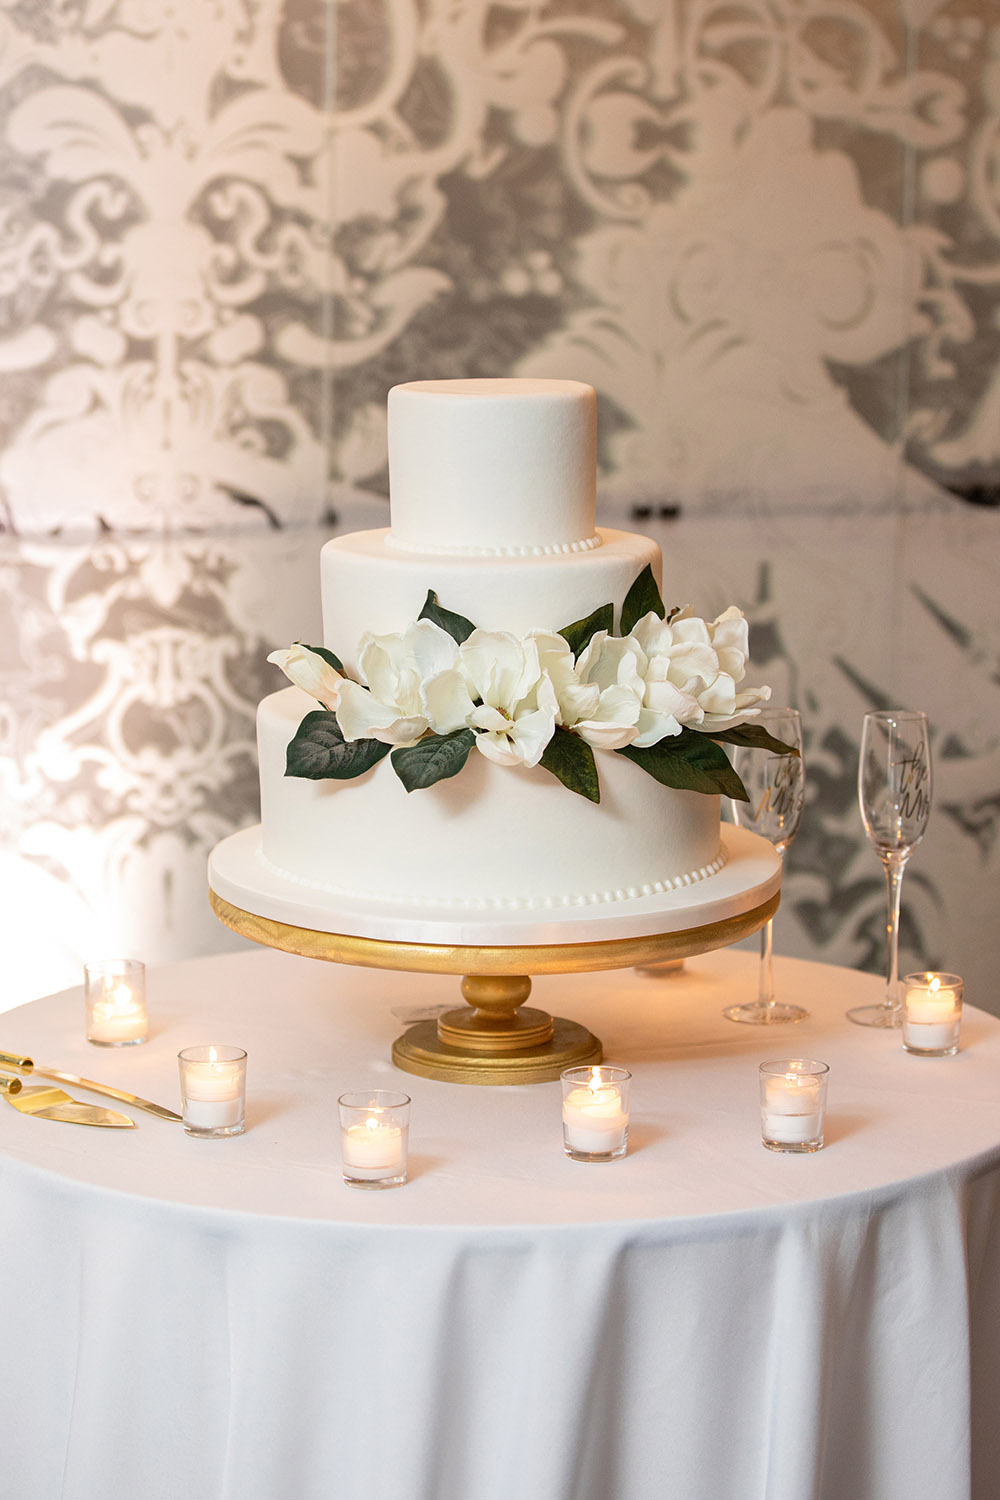 Magnolia wedding cake by Kimbla's Cakes